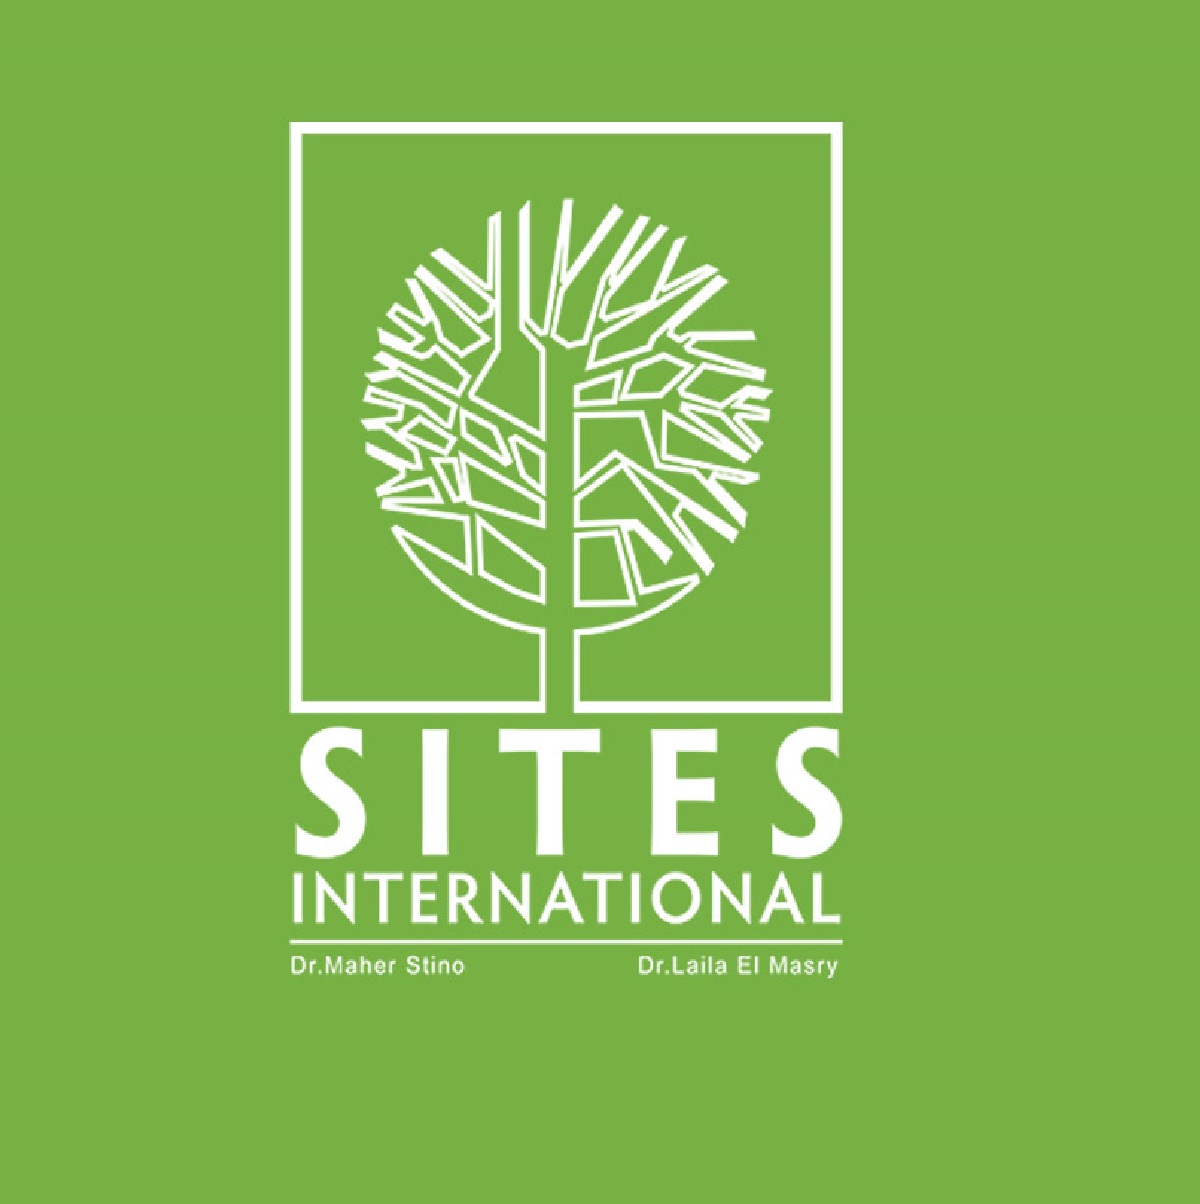 Sites International